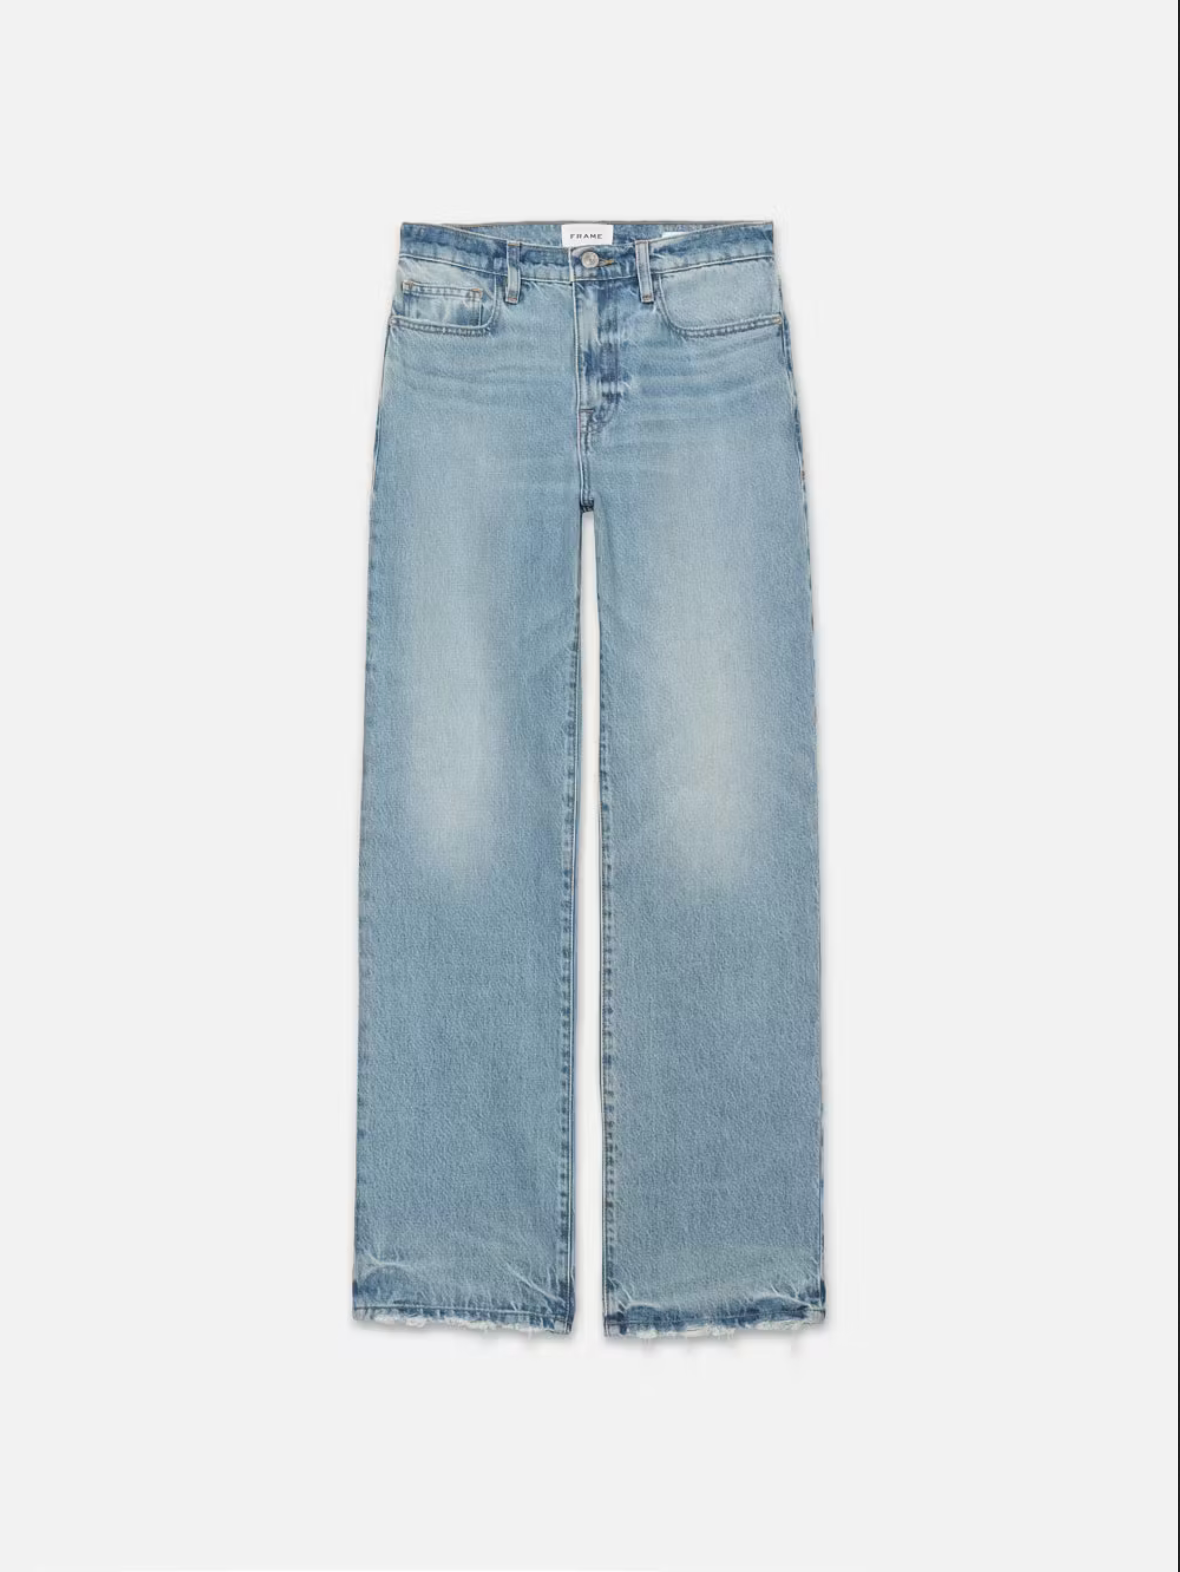 High waist straight leg jeans in light blue wash